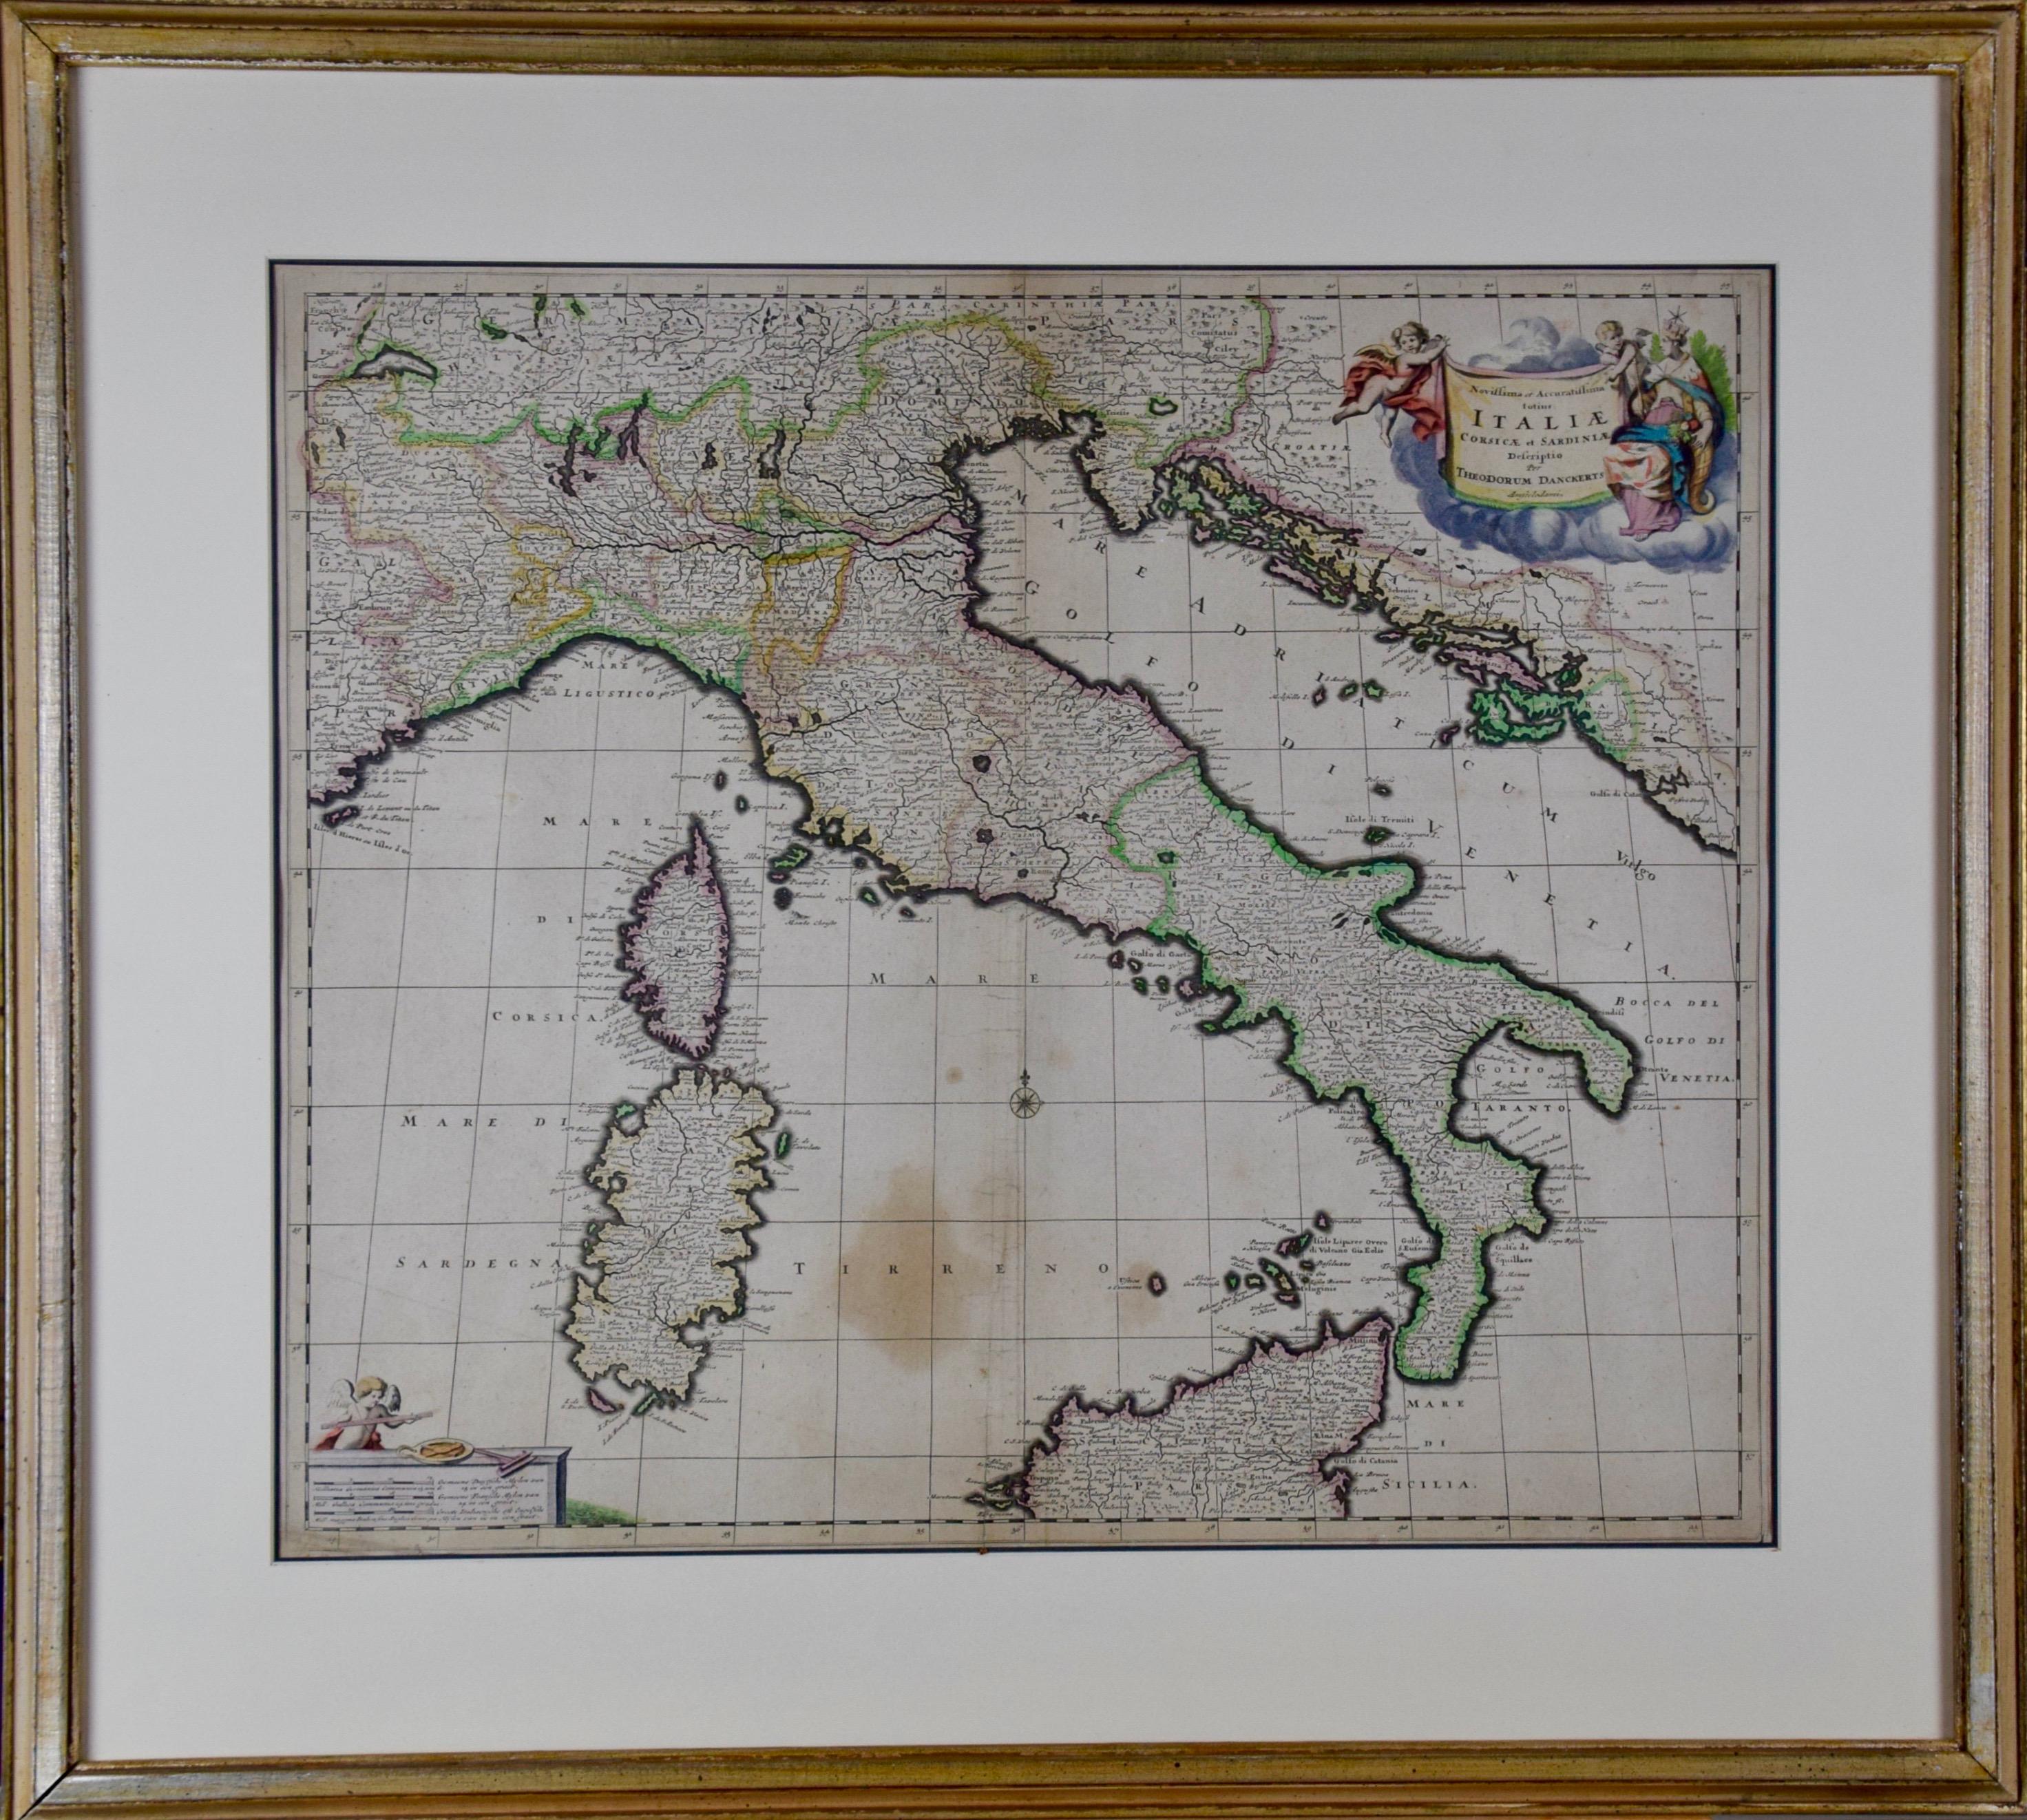 17th Century Dutch Map of Italy, Sicily, Sardinia, Corsica and Dalmatian Coast - Print by Theodorus Danckerts